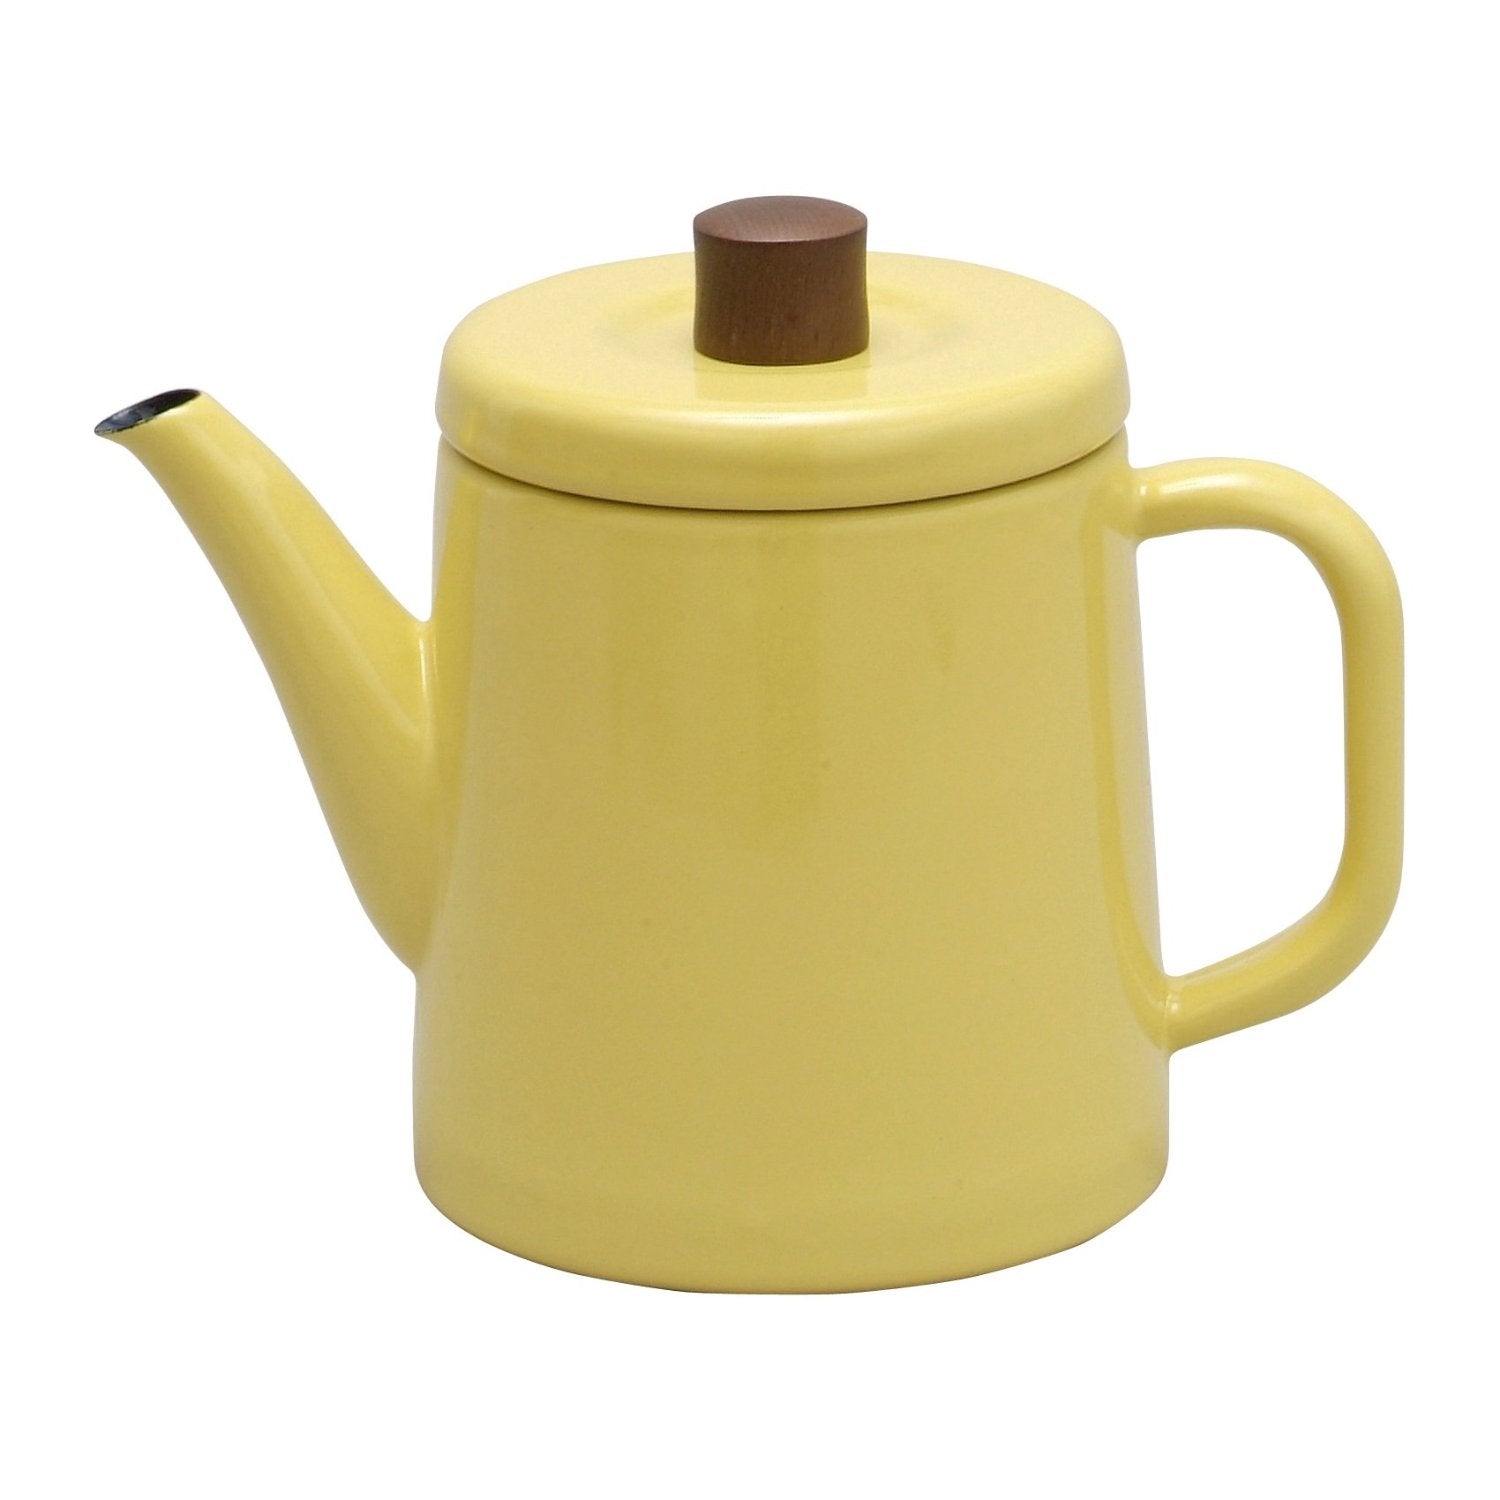 Enamel Teapot / Kettle (Yellow)